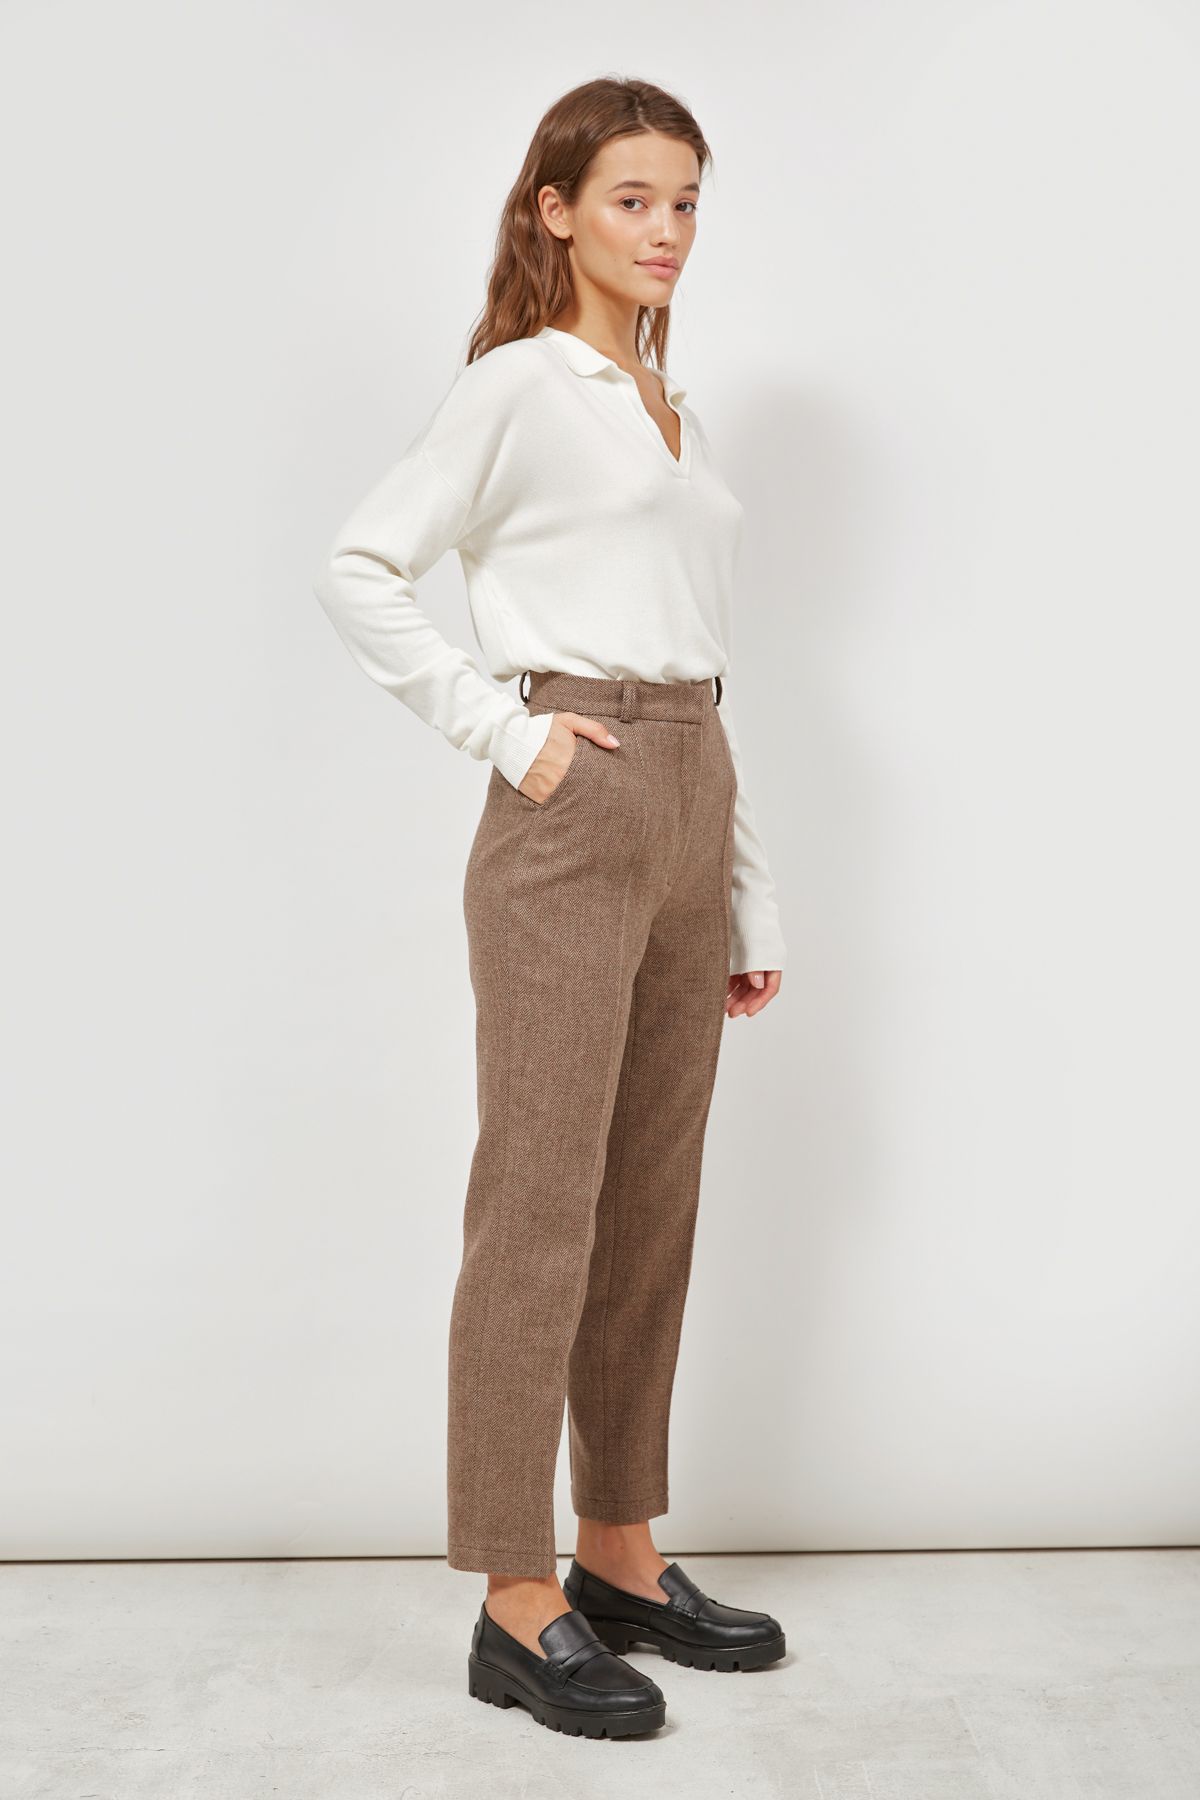 Cropped trousers with wool in brown herringbone print, photo 2